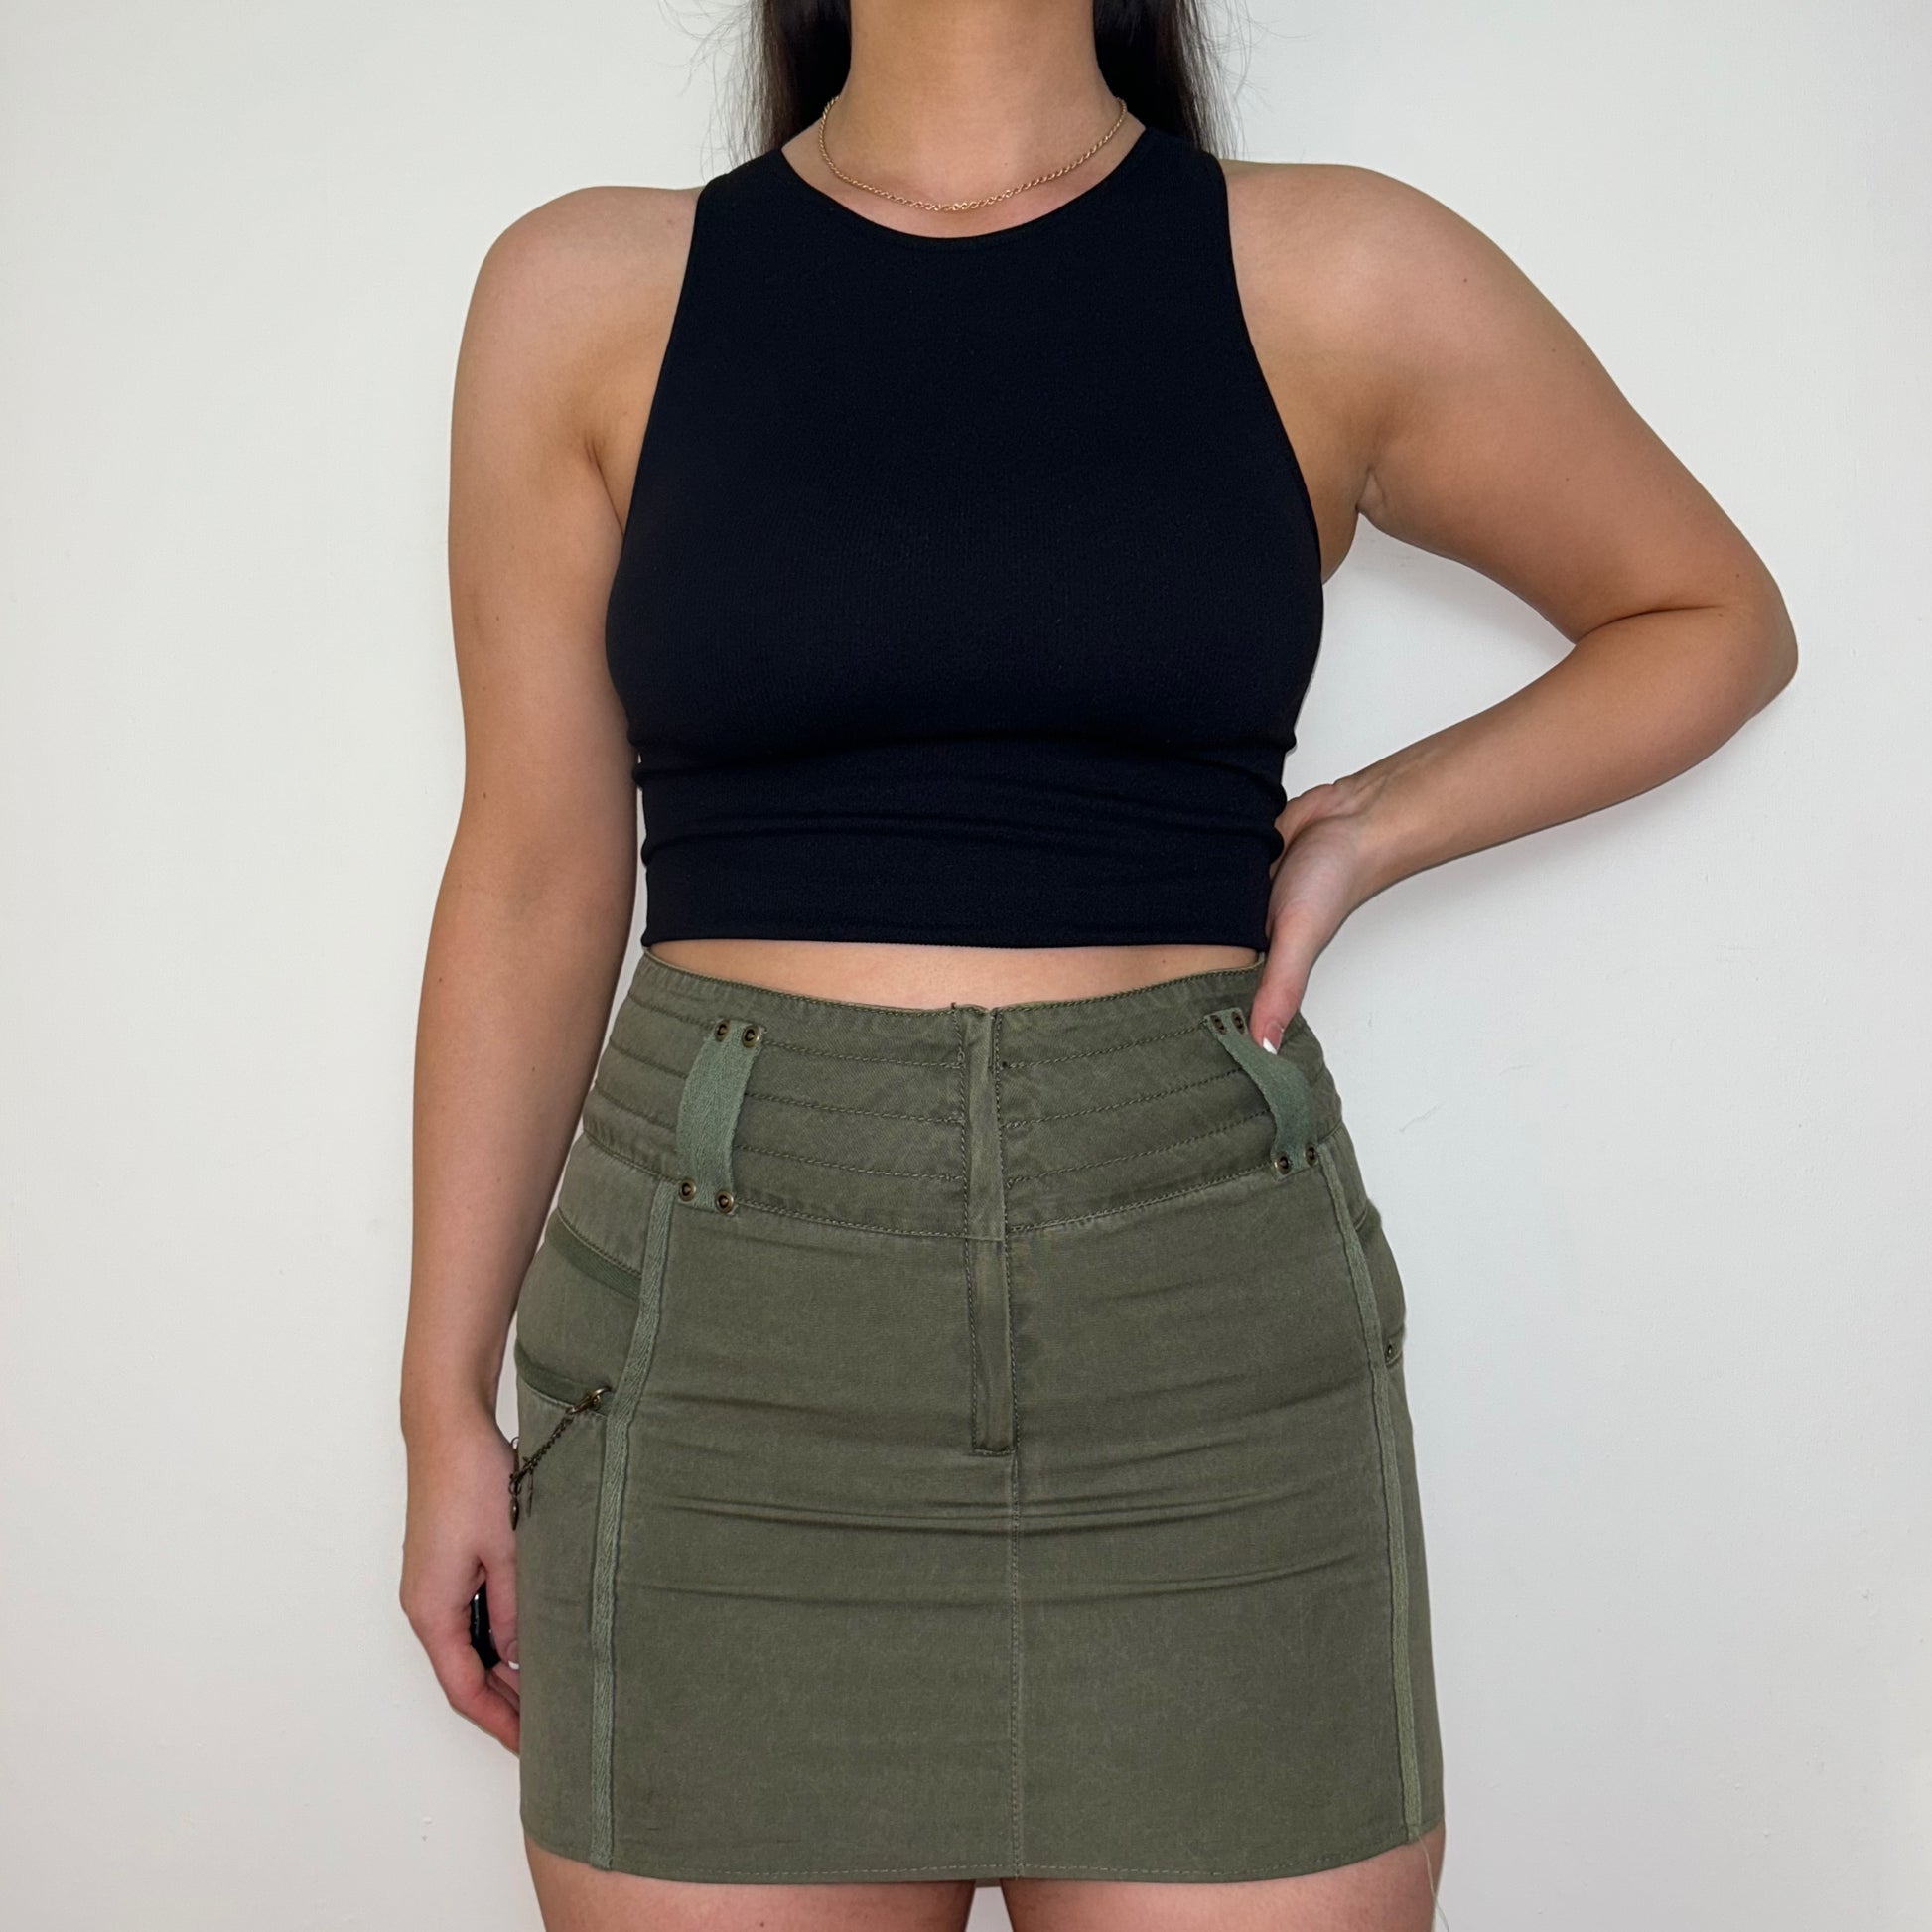 khaki mini cargo skirt shown on a model wearing a black sleeveless crop top